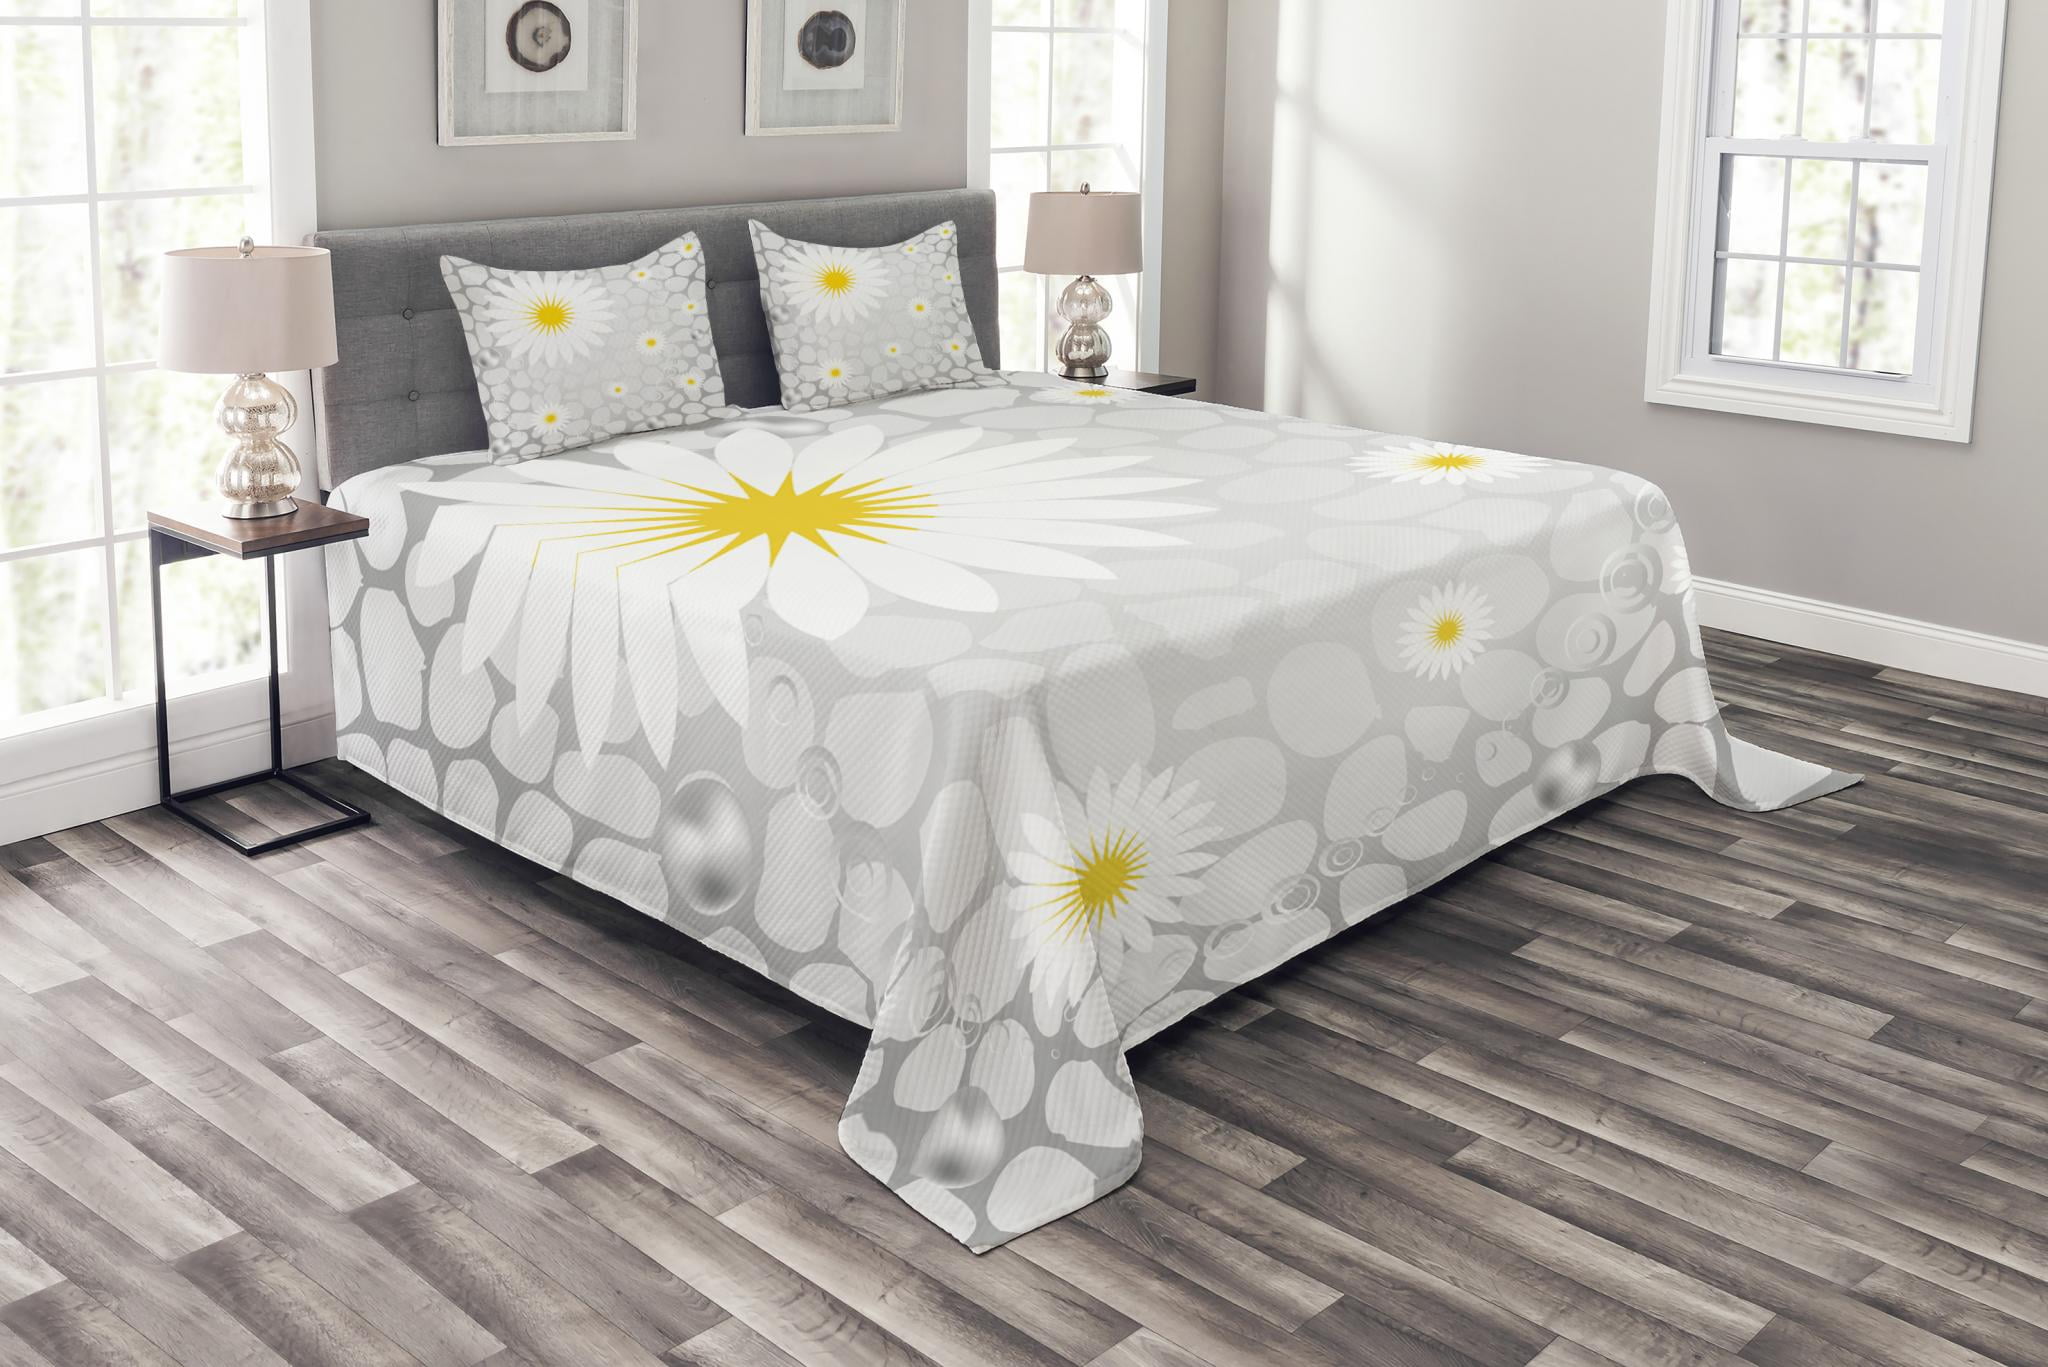 Details about   Indian Mandala Printed Design Indigo Kantha Work Queen Size BedSpread Comforter 